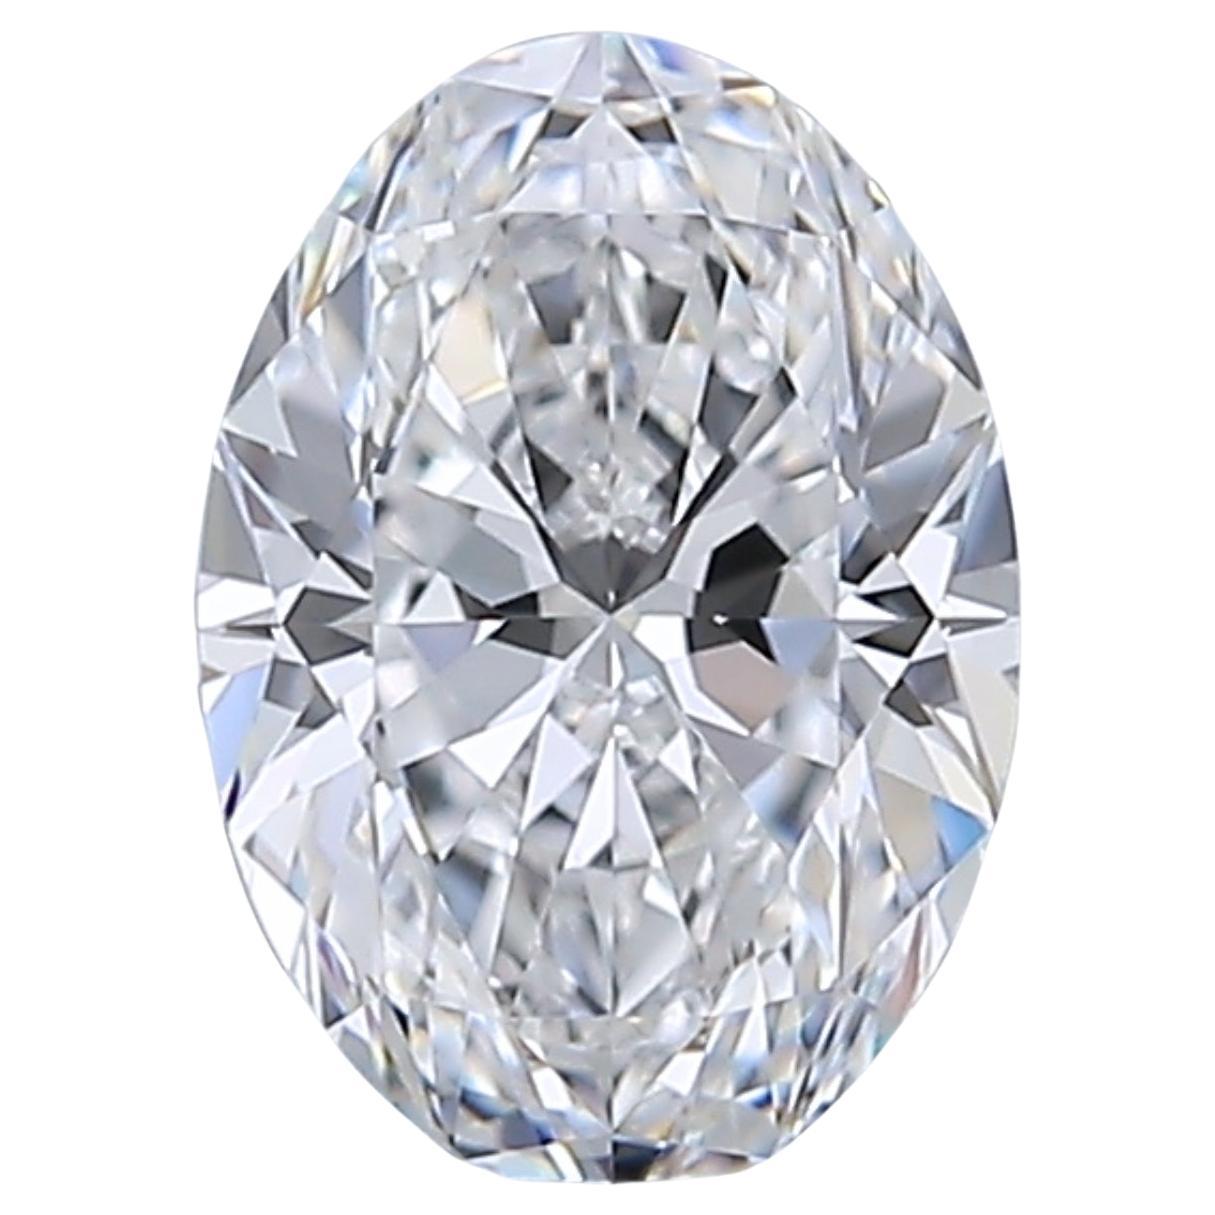 Elegant 1.15ct Double Excellent Ideal Cut Diamond - GIA Certified